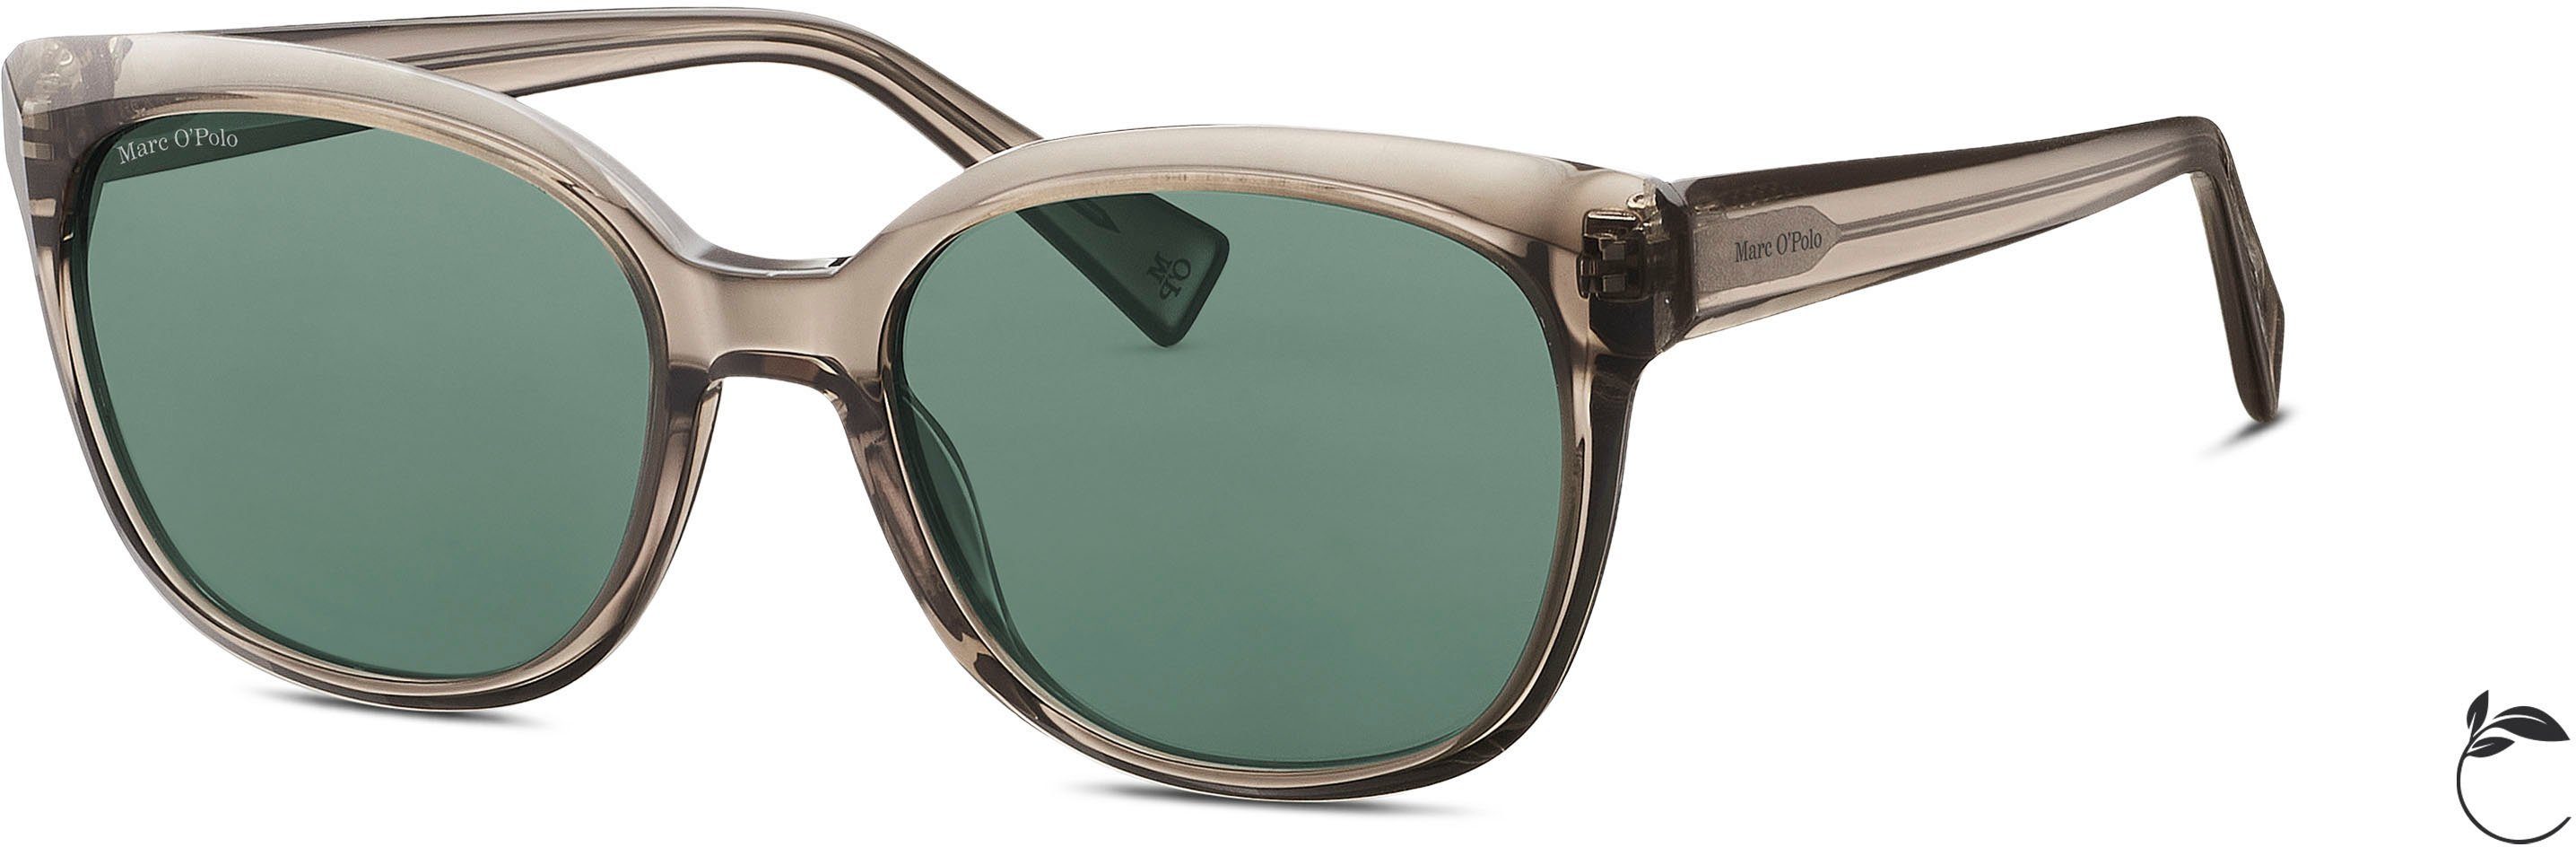 Marc Karree-Form 506196 Sonnenbrille Modell O'Polo hellbraun-grün